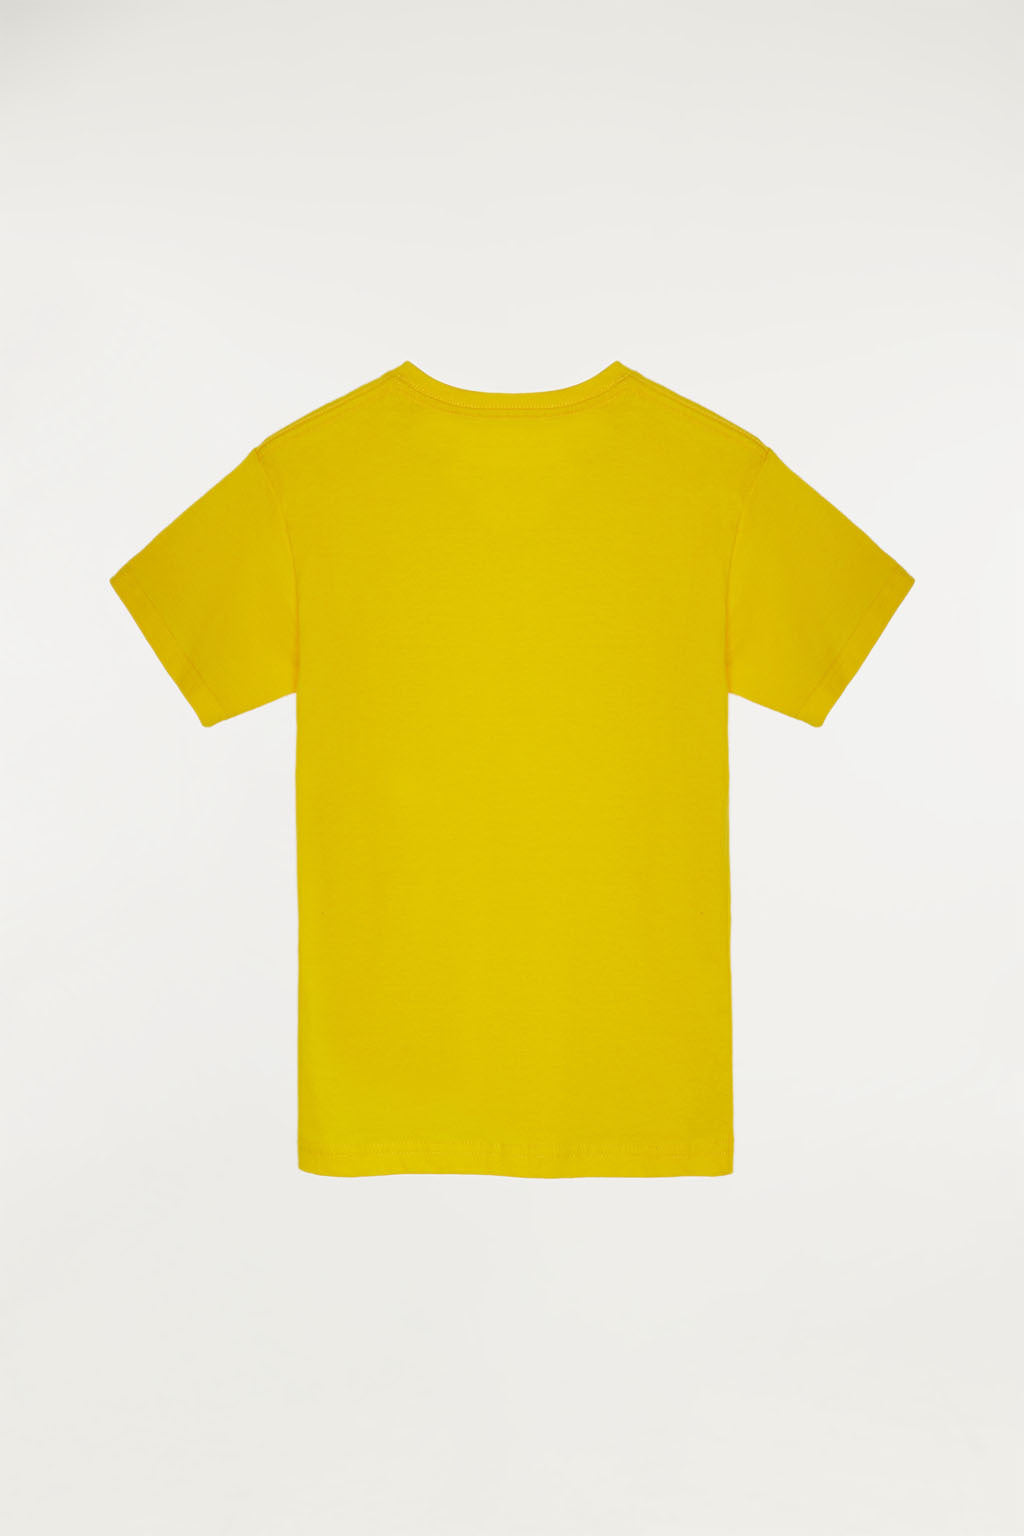 Camiseta amarilla con pequeño logo bordado | NIÑOS | POLO CLUB